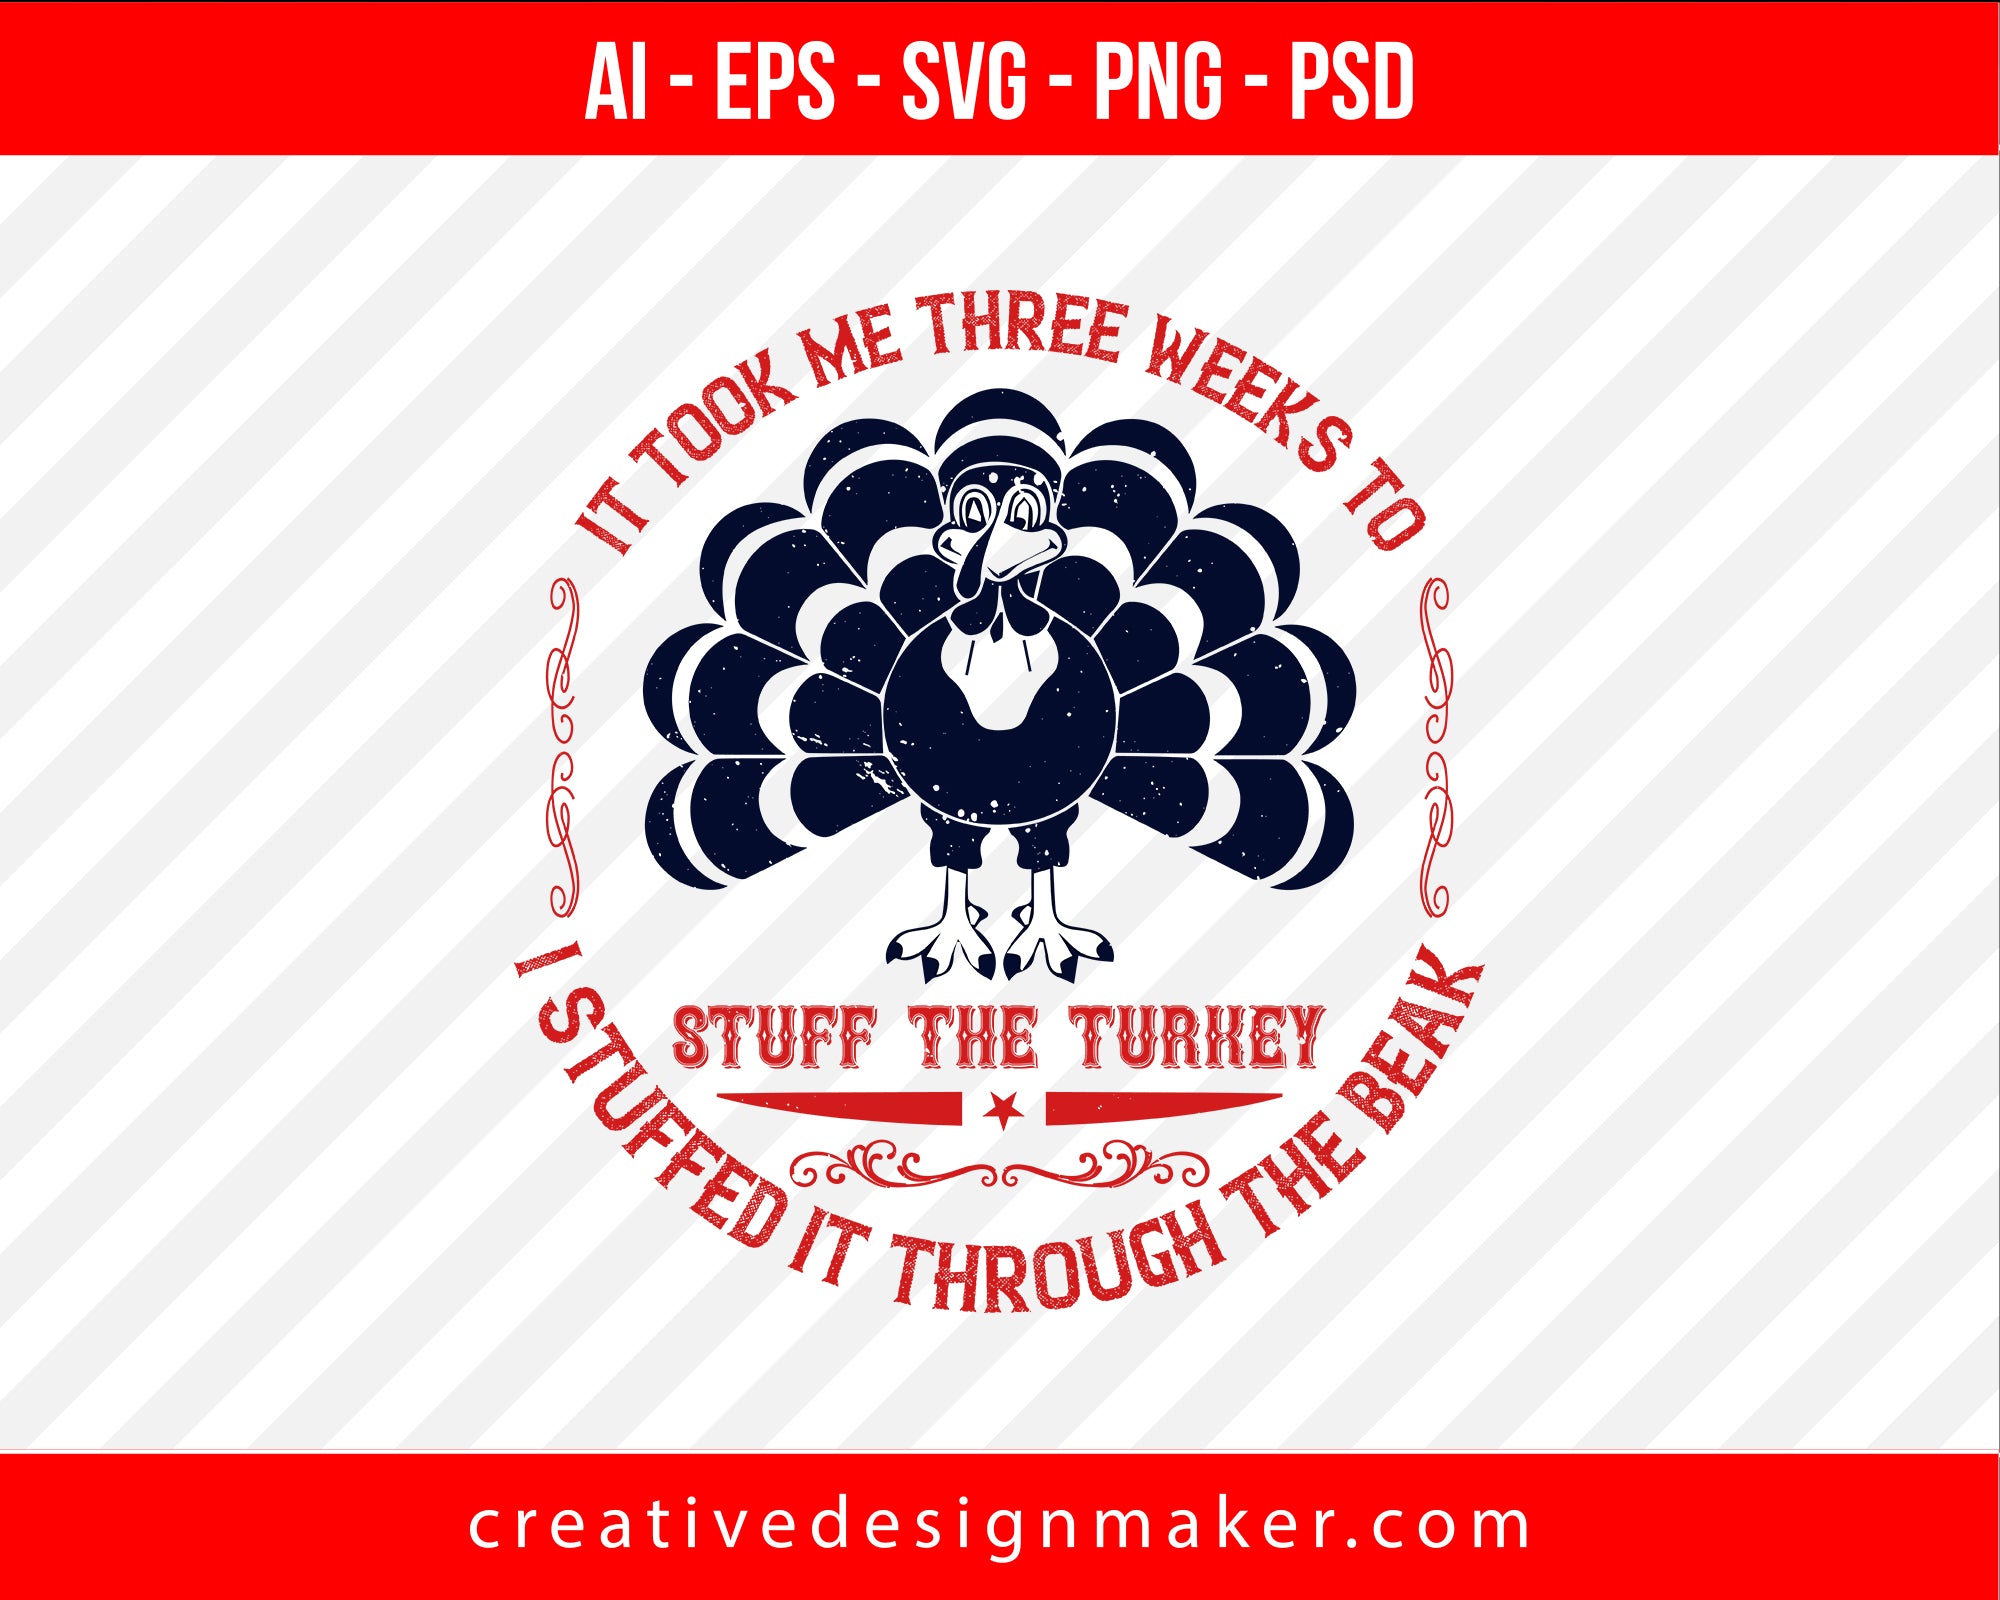 It took me three weeks to stuff the turkey. I stuffed it through the beak Thanksgiving Print Ready Editable T-Shirt SVG Design!